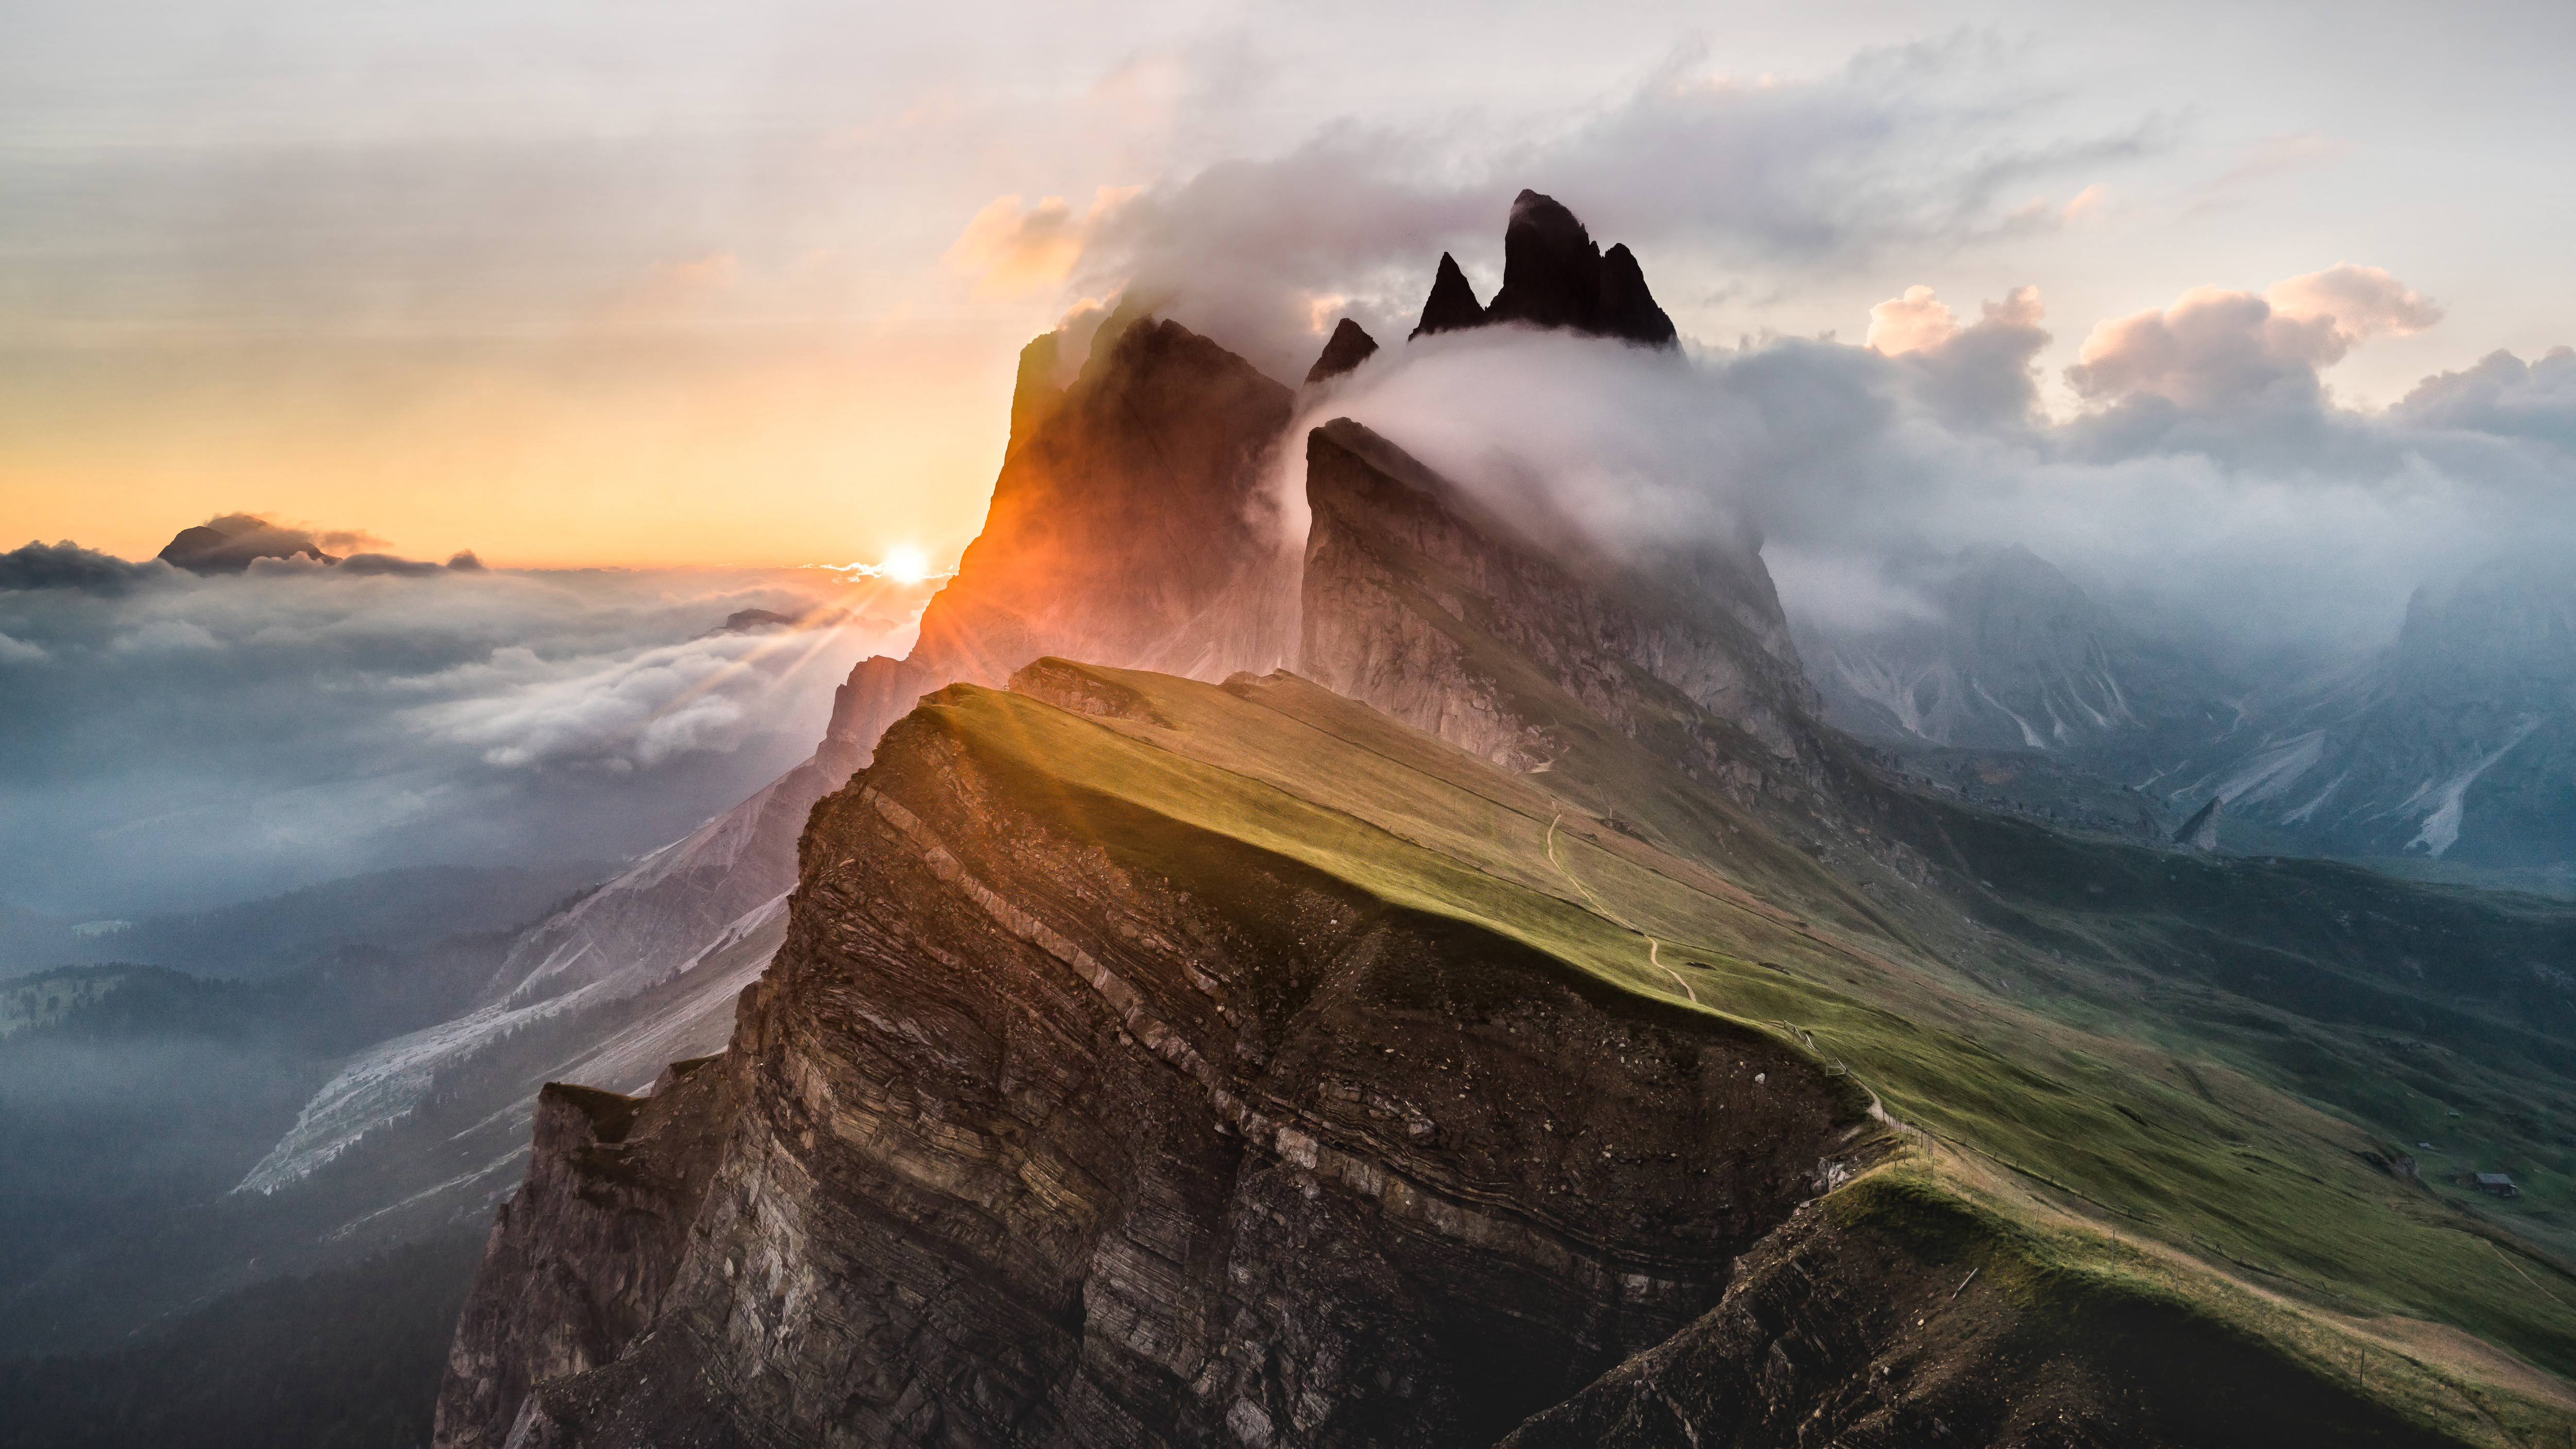 General 5000x2813 mountains landscape sunlight clouds depth of field sunrise sky orange sky nature rocks Dolomites